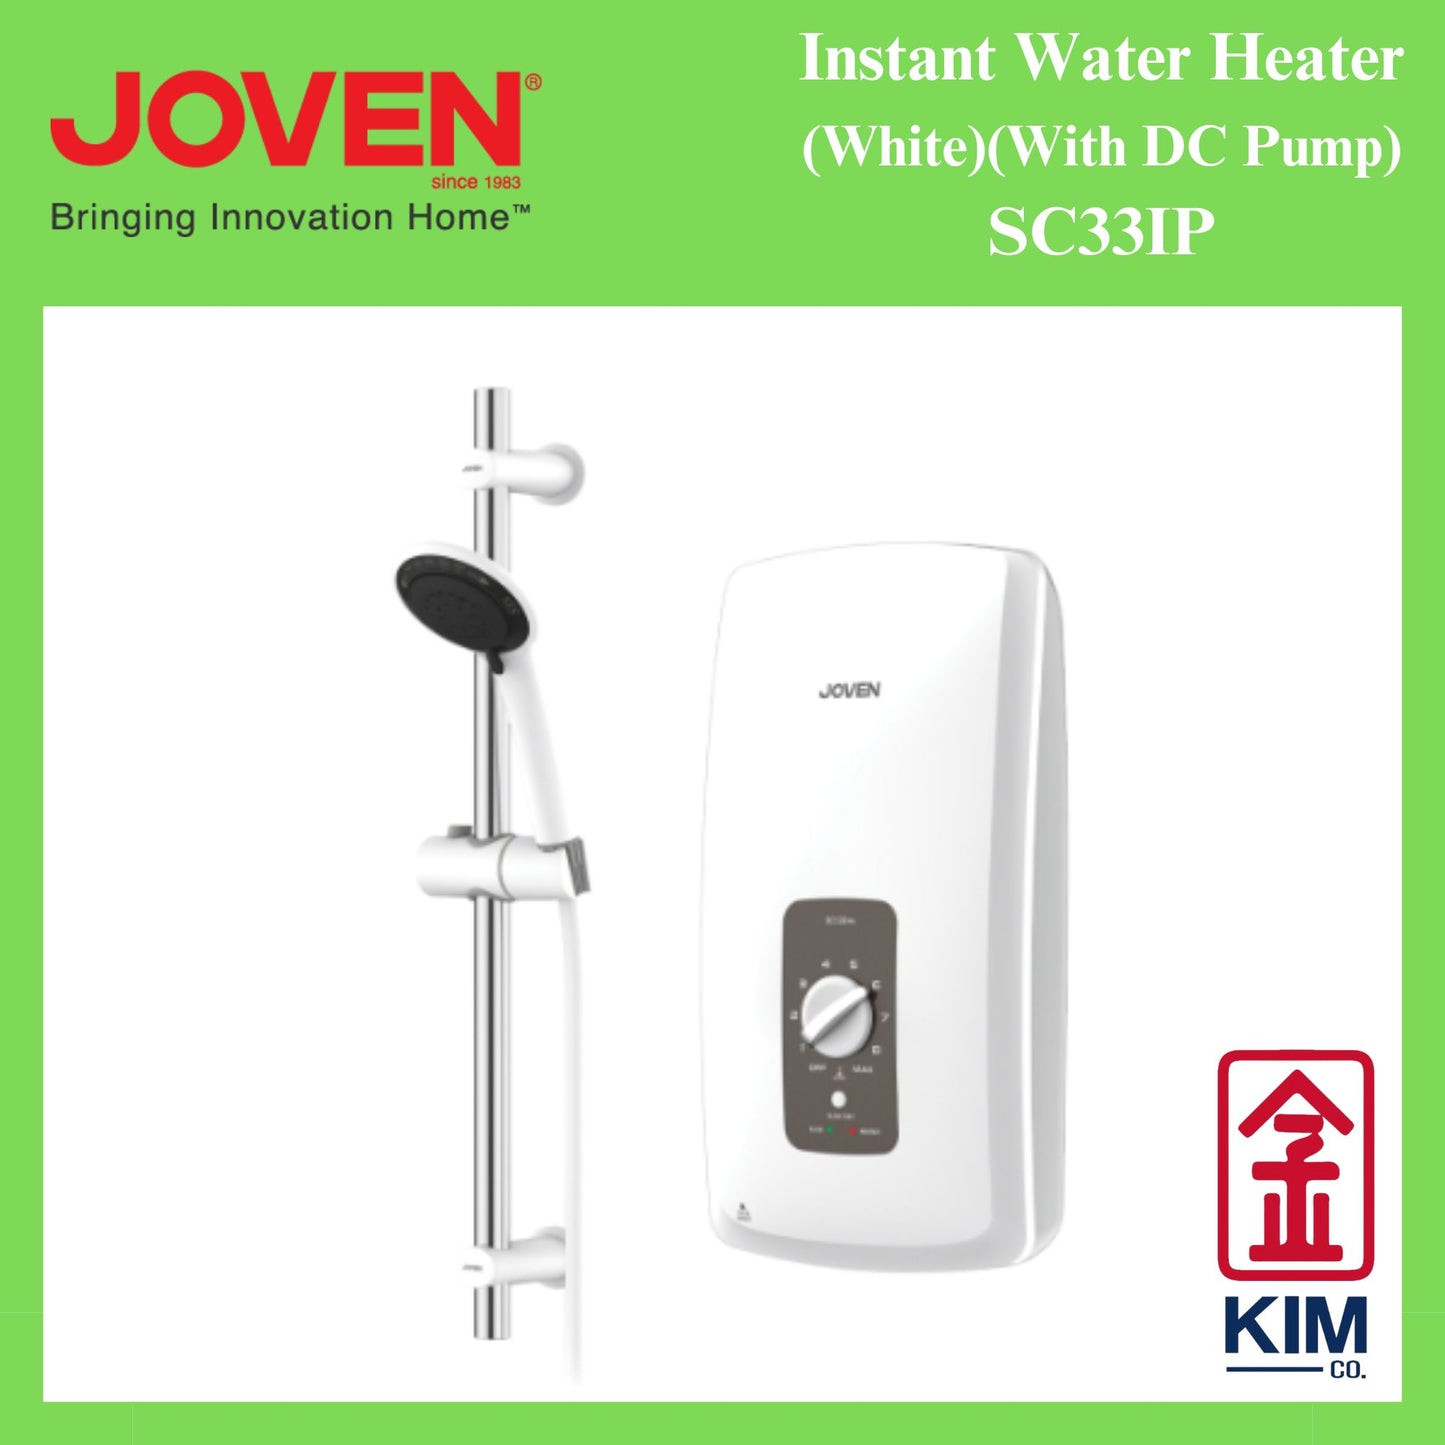 Joven Instant Water Heater With DC Pump (SC33IP)